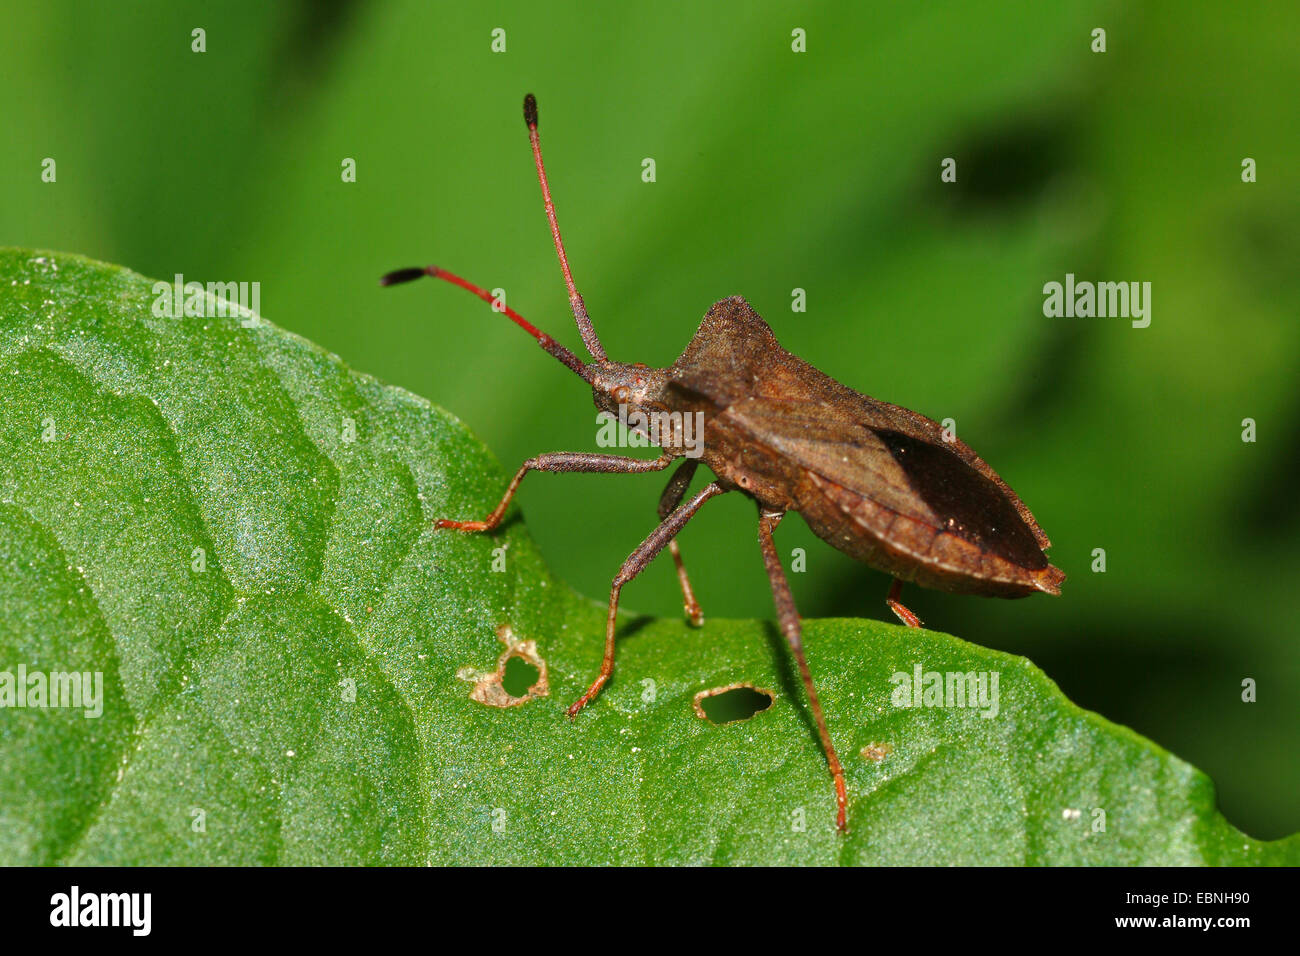 Squash bug (Coreus marginatus, Mesocerus marginatus), sentada sobre una hoja, Alemania Foto de stock